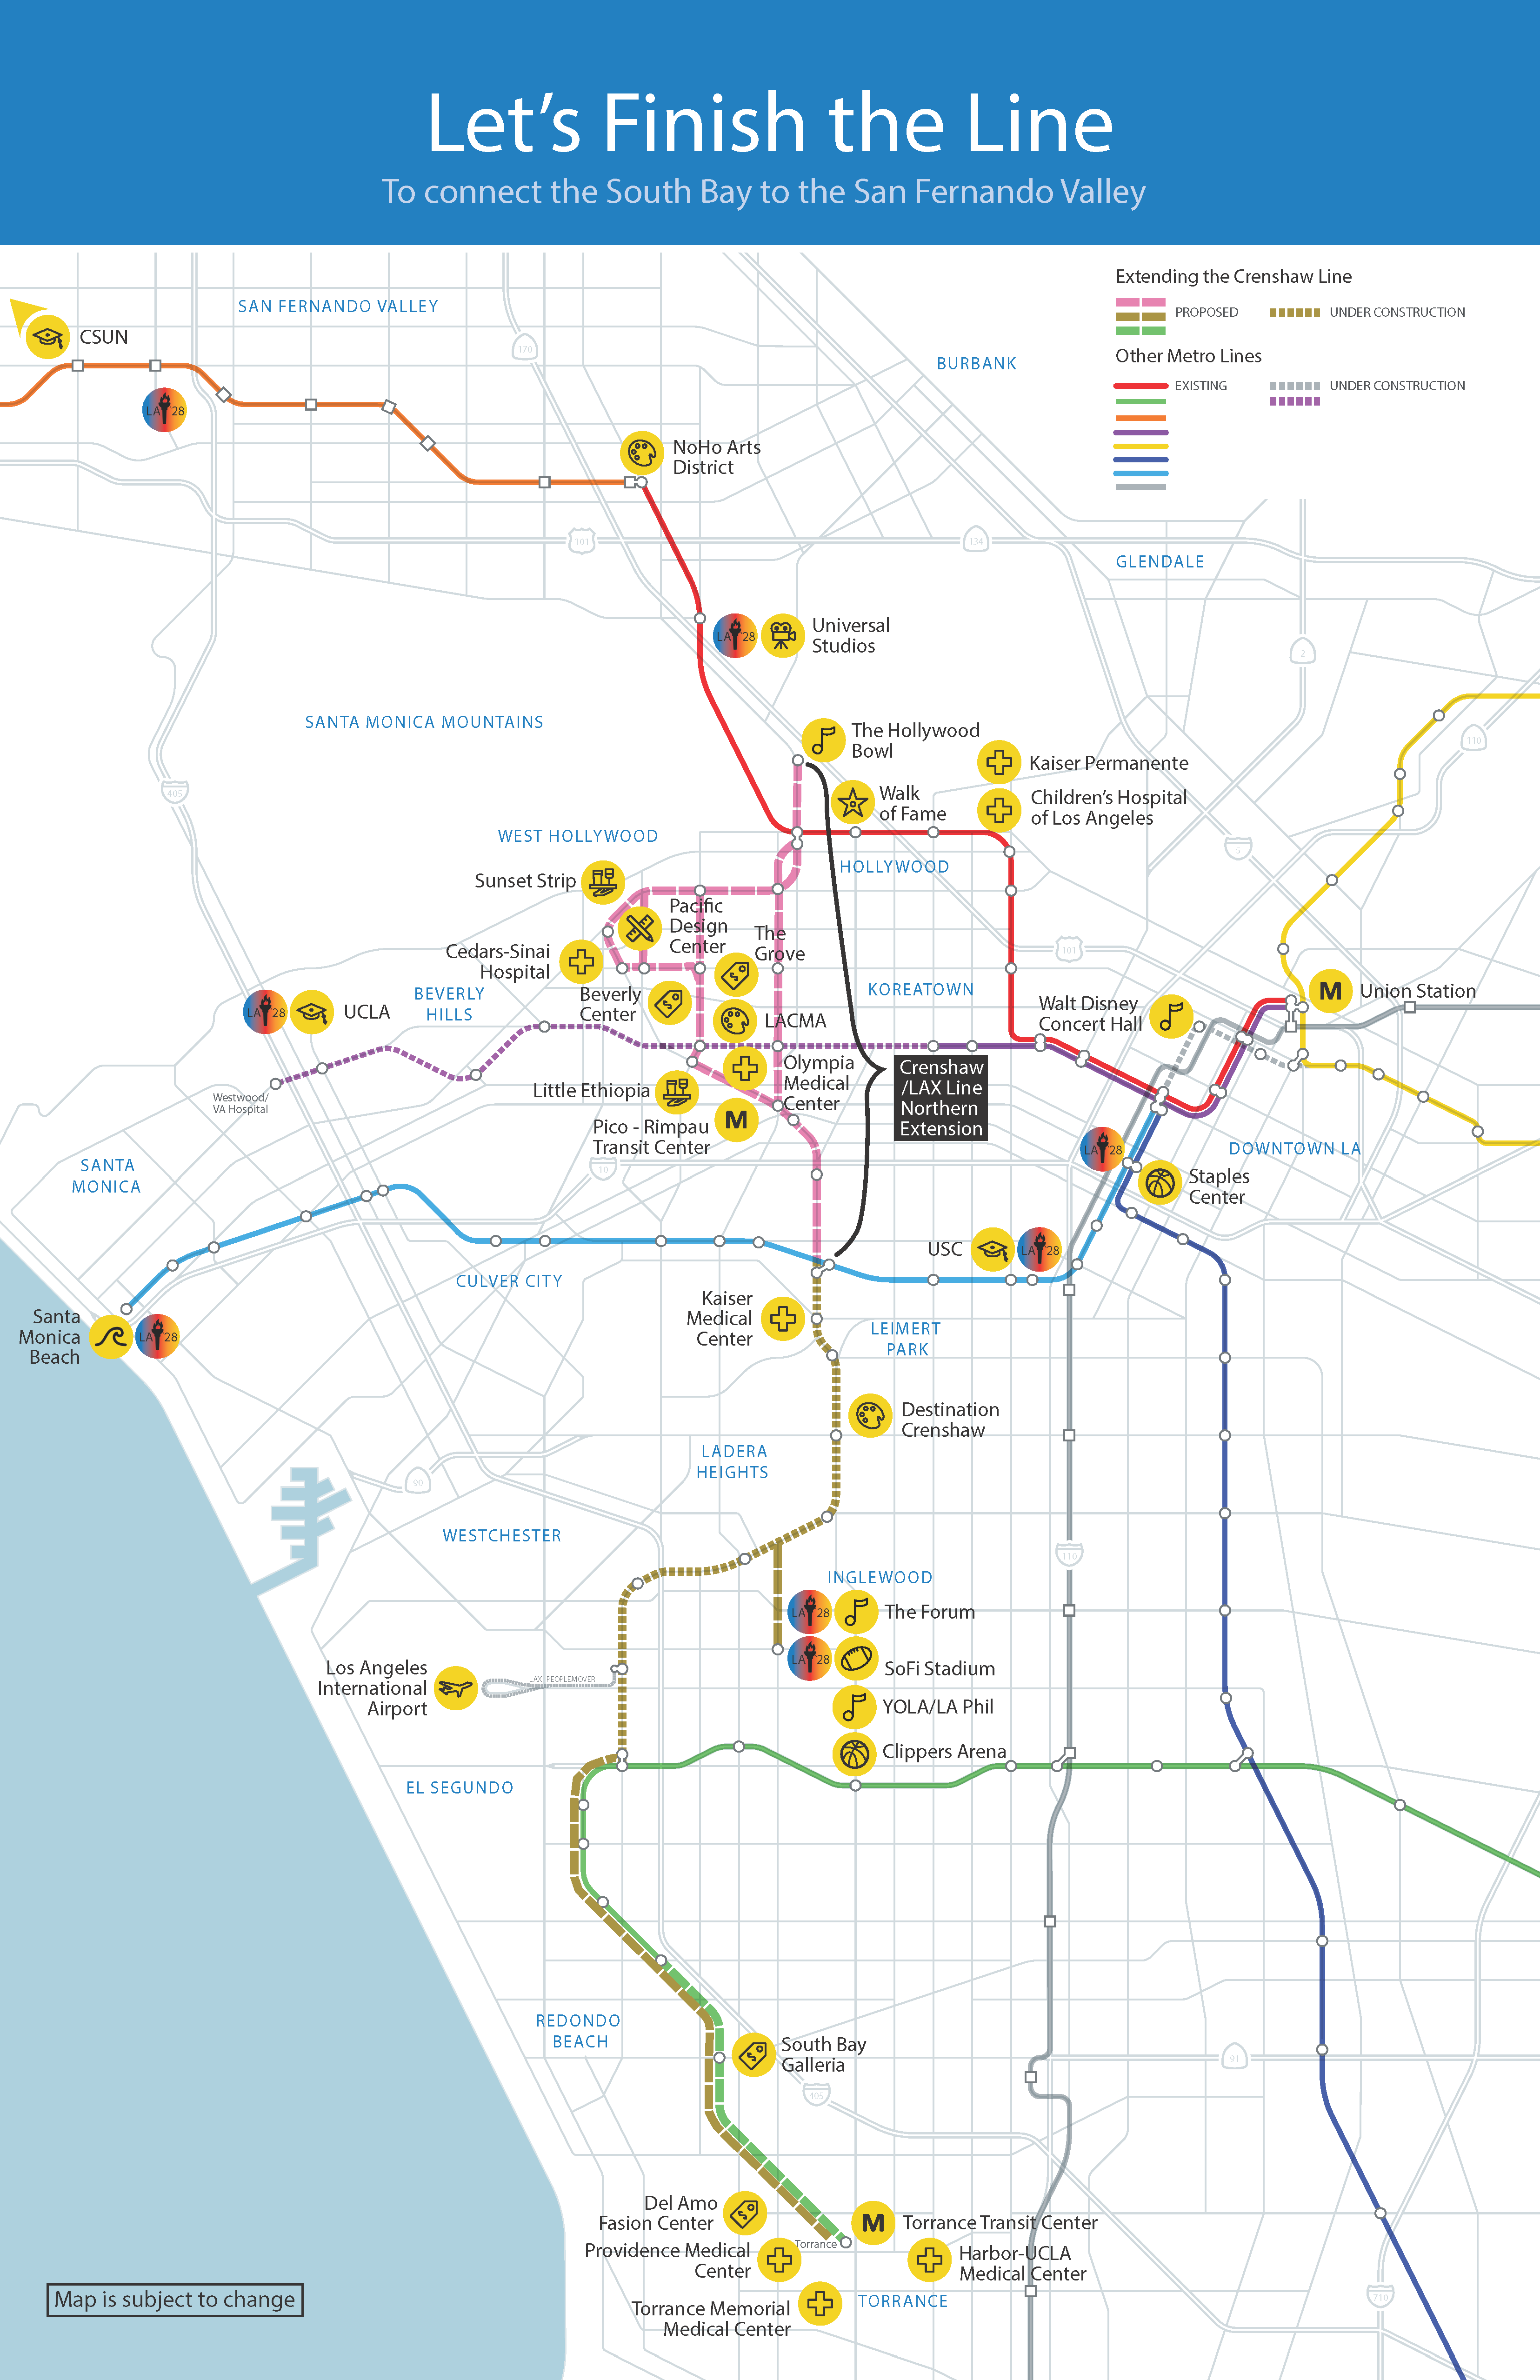 WHAM – West Hollywood Advocates for Metro Rail